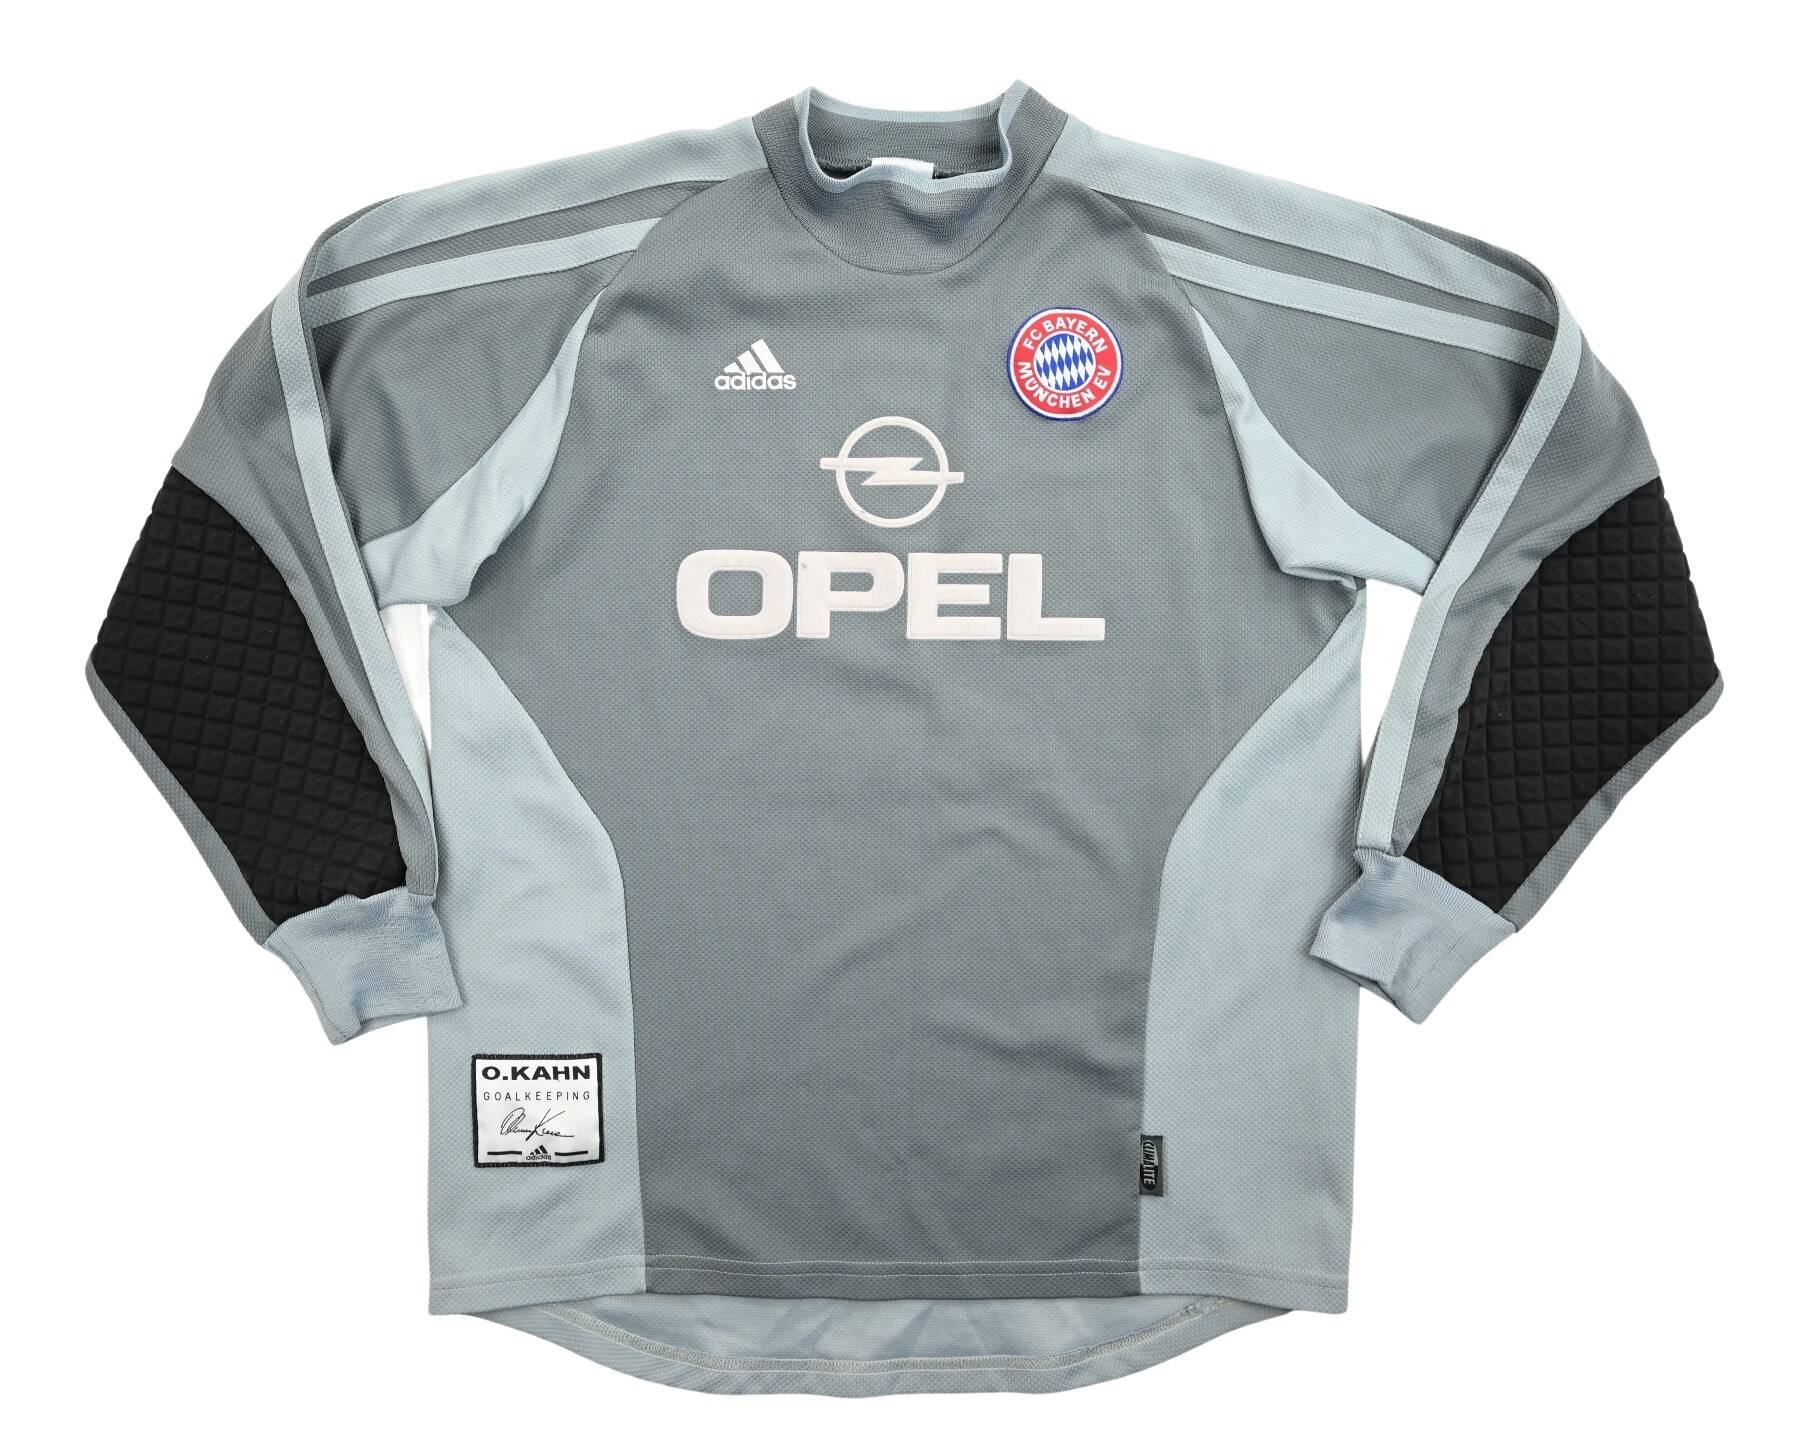 bayern munich goalkeeper jersey